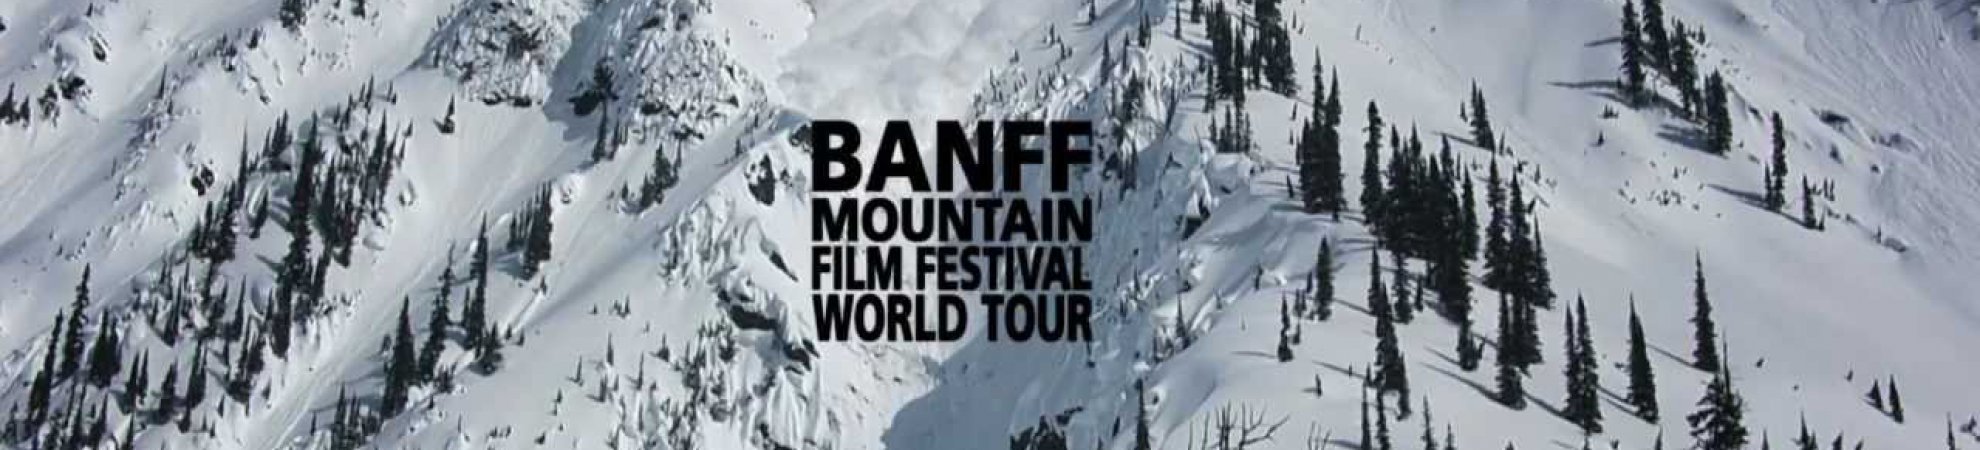 banff film festival